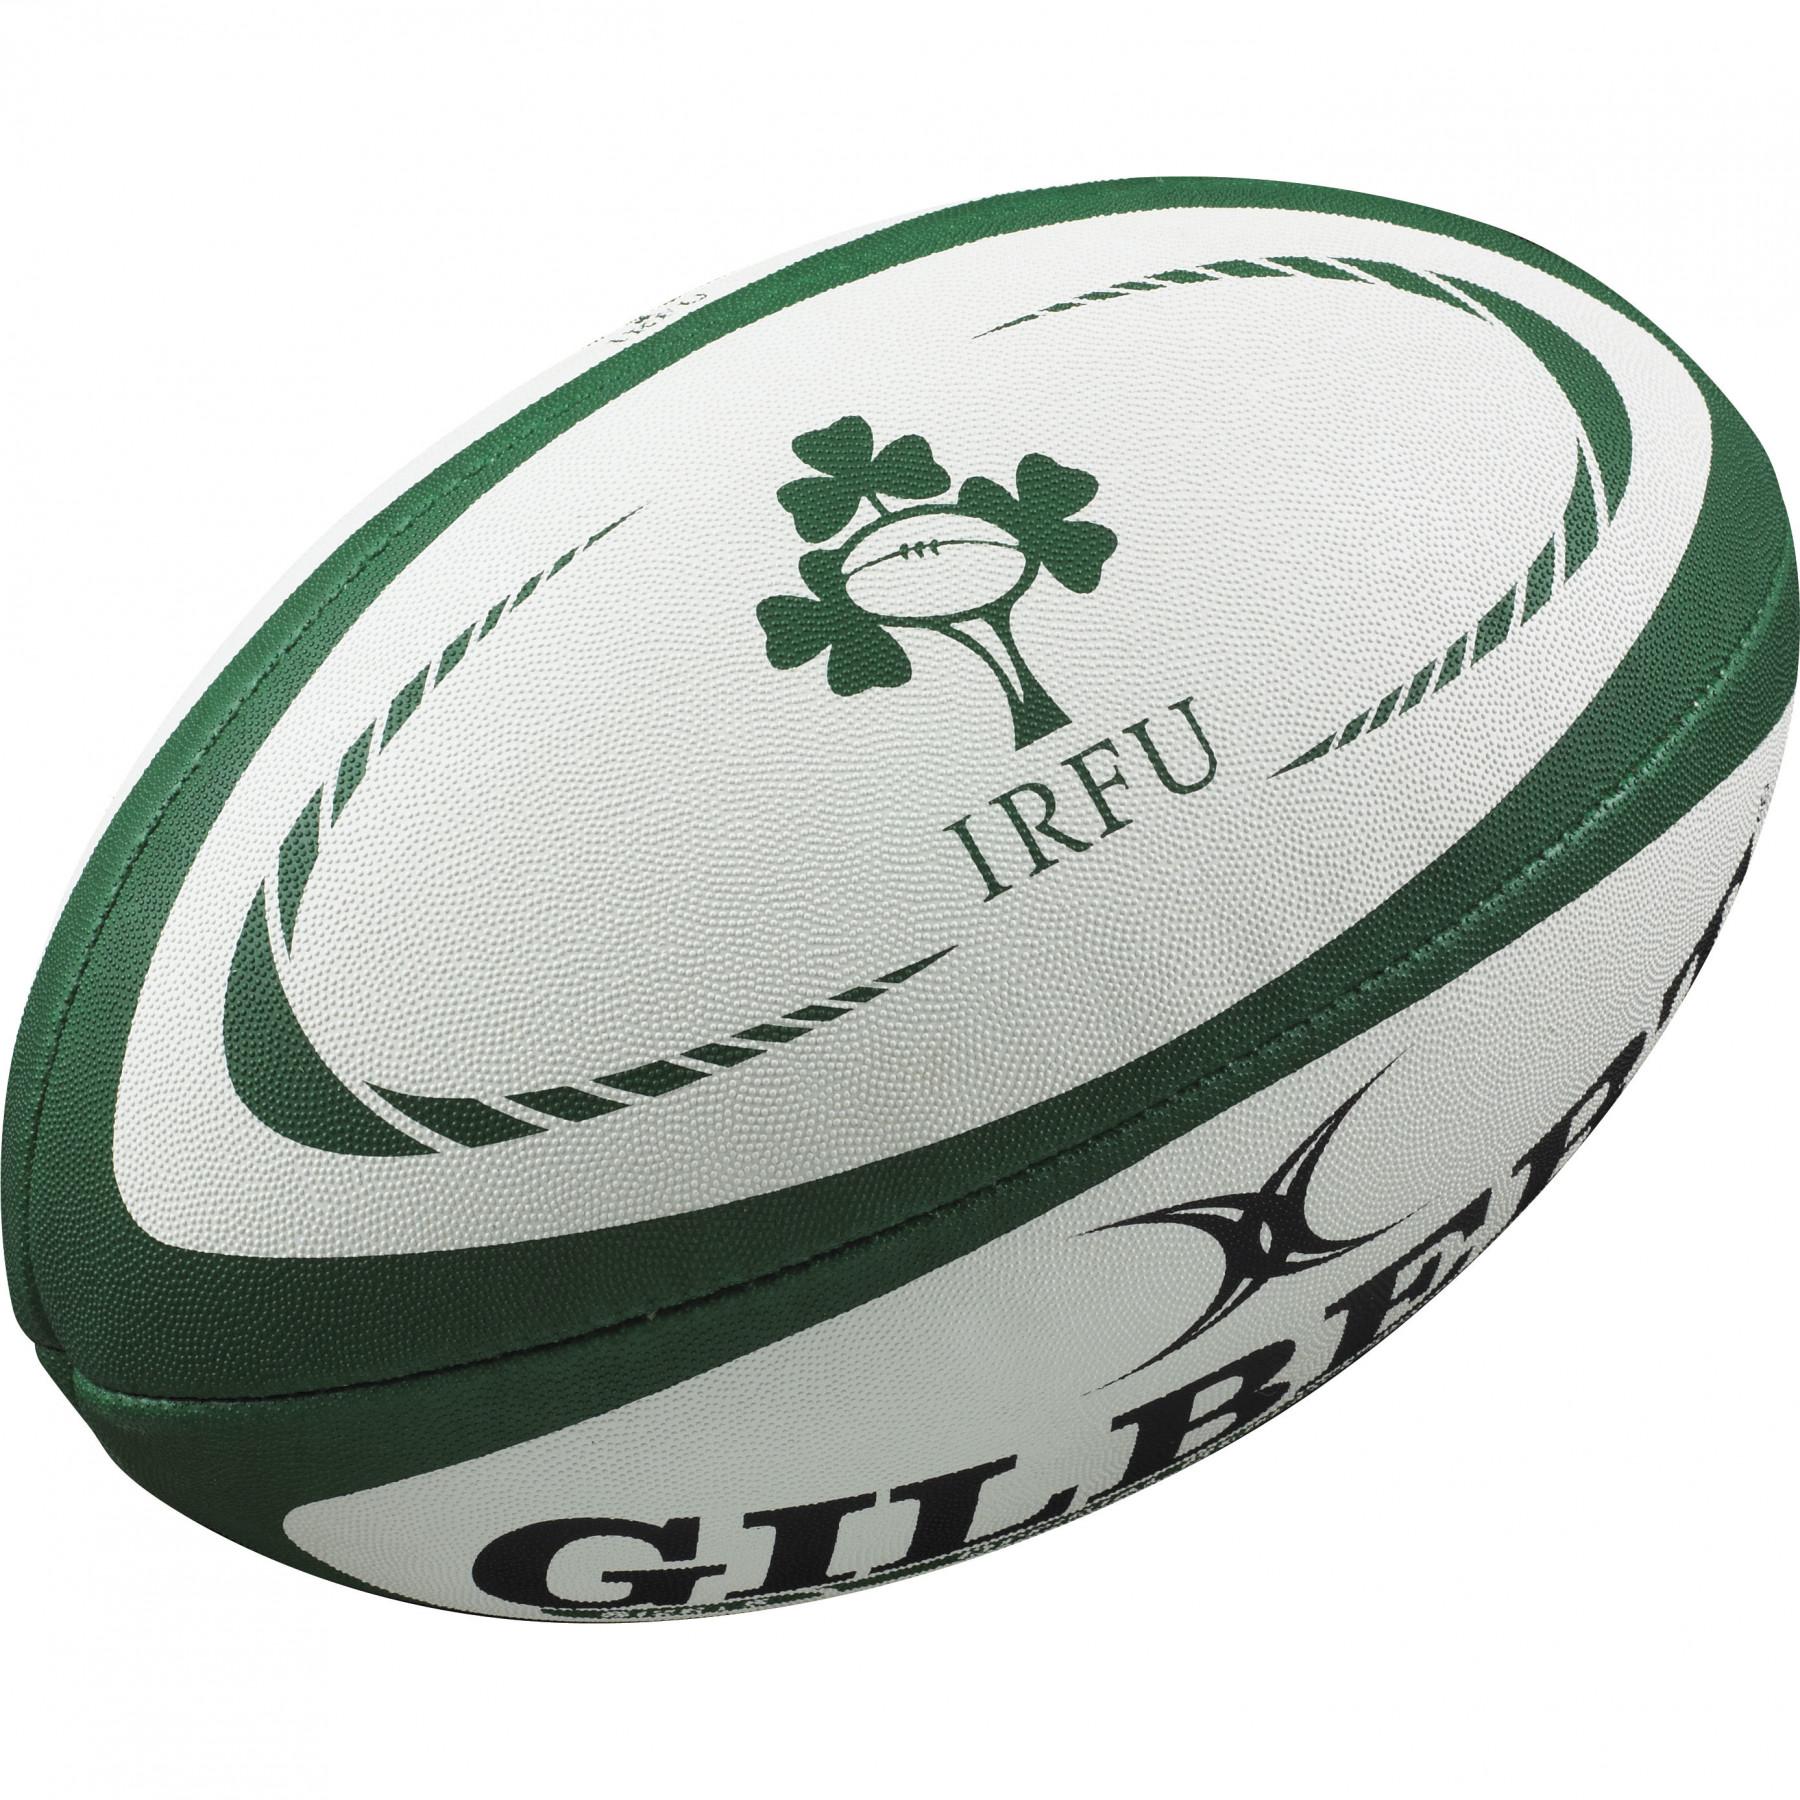 Rugby ball midi replica Gilbert Irlande (taille 2)